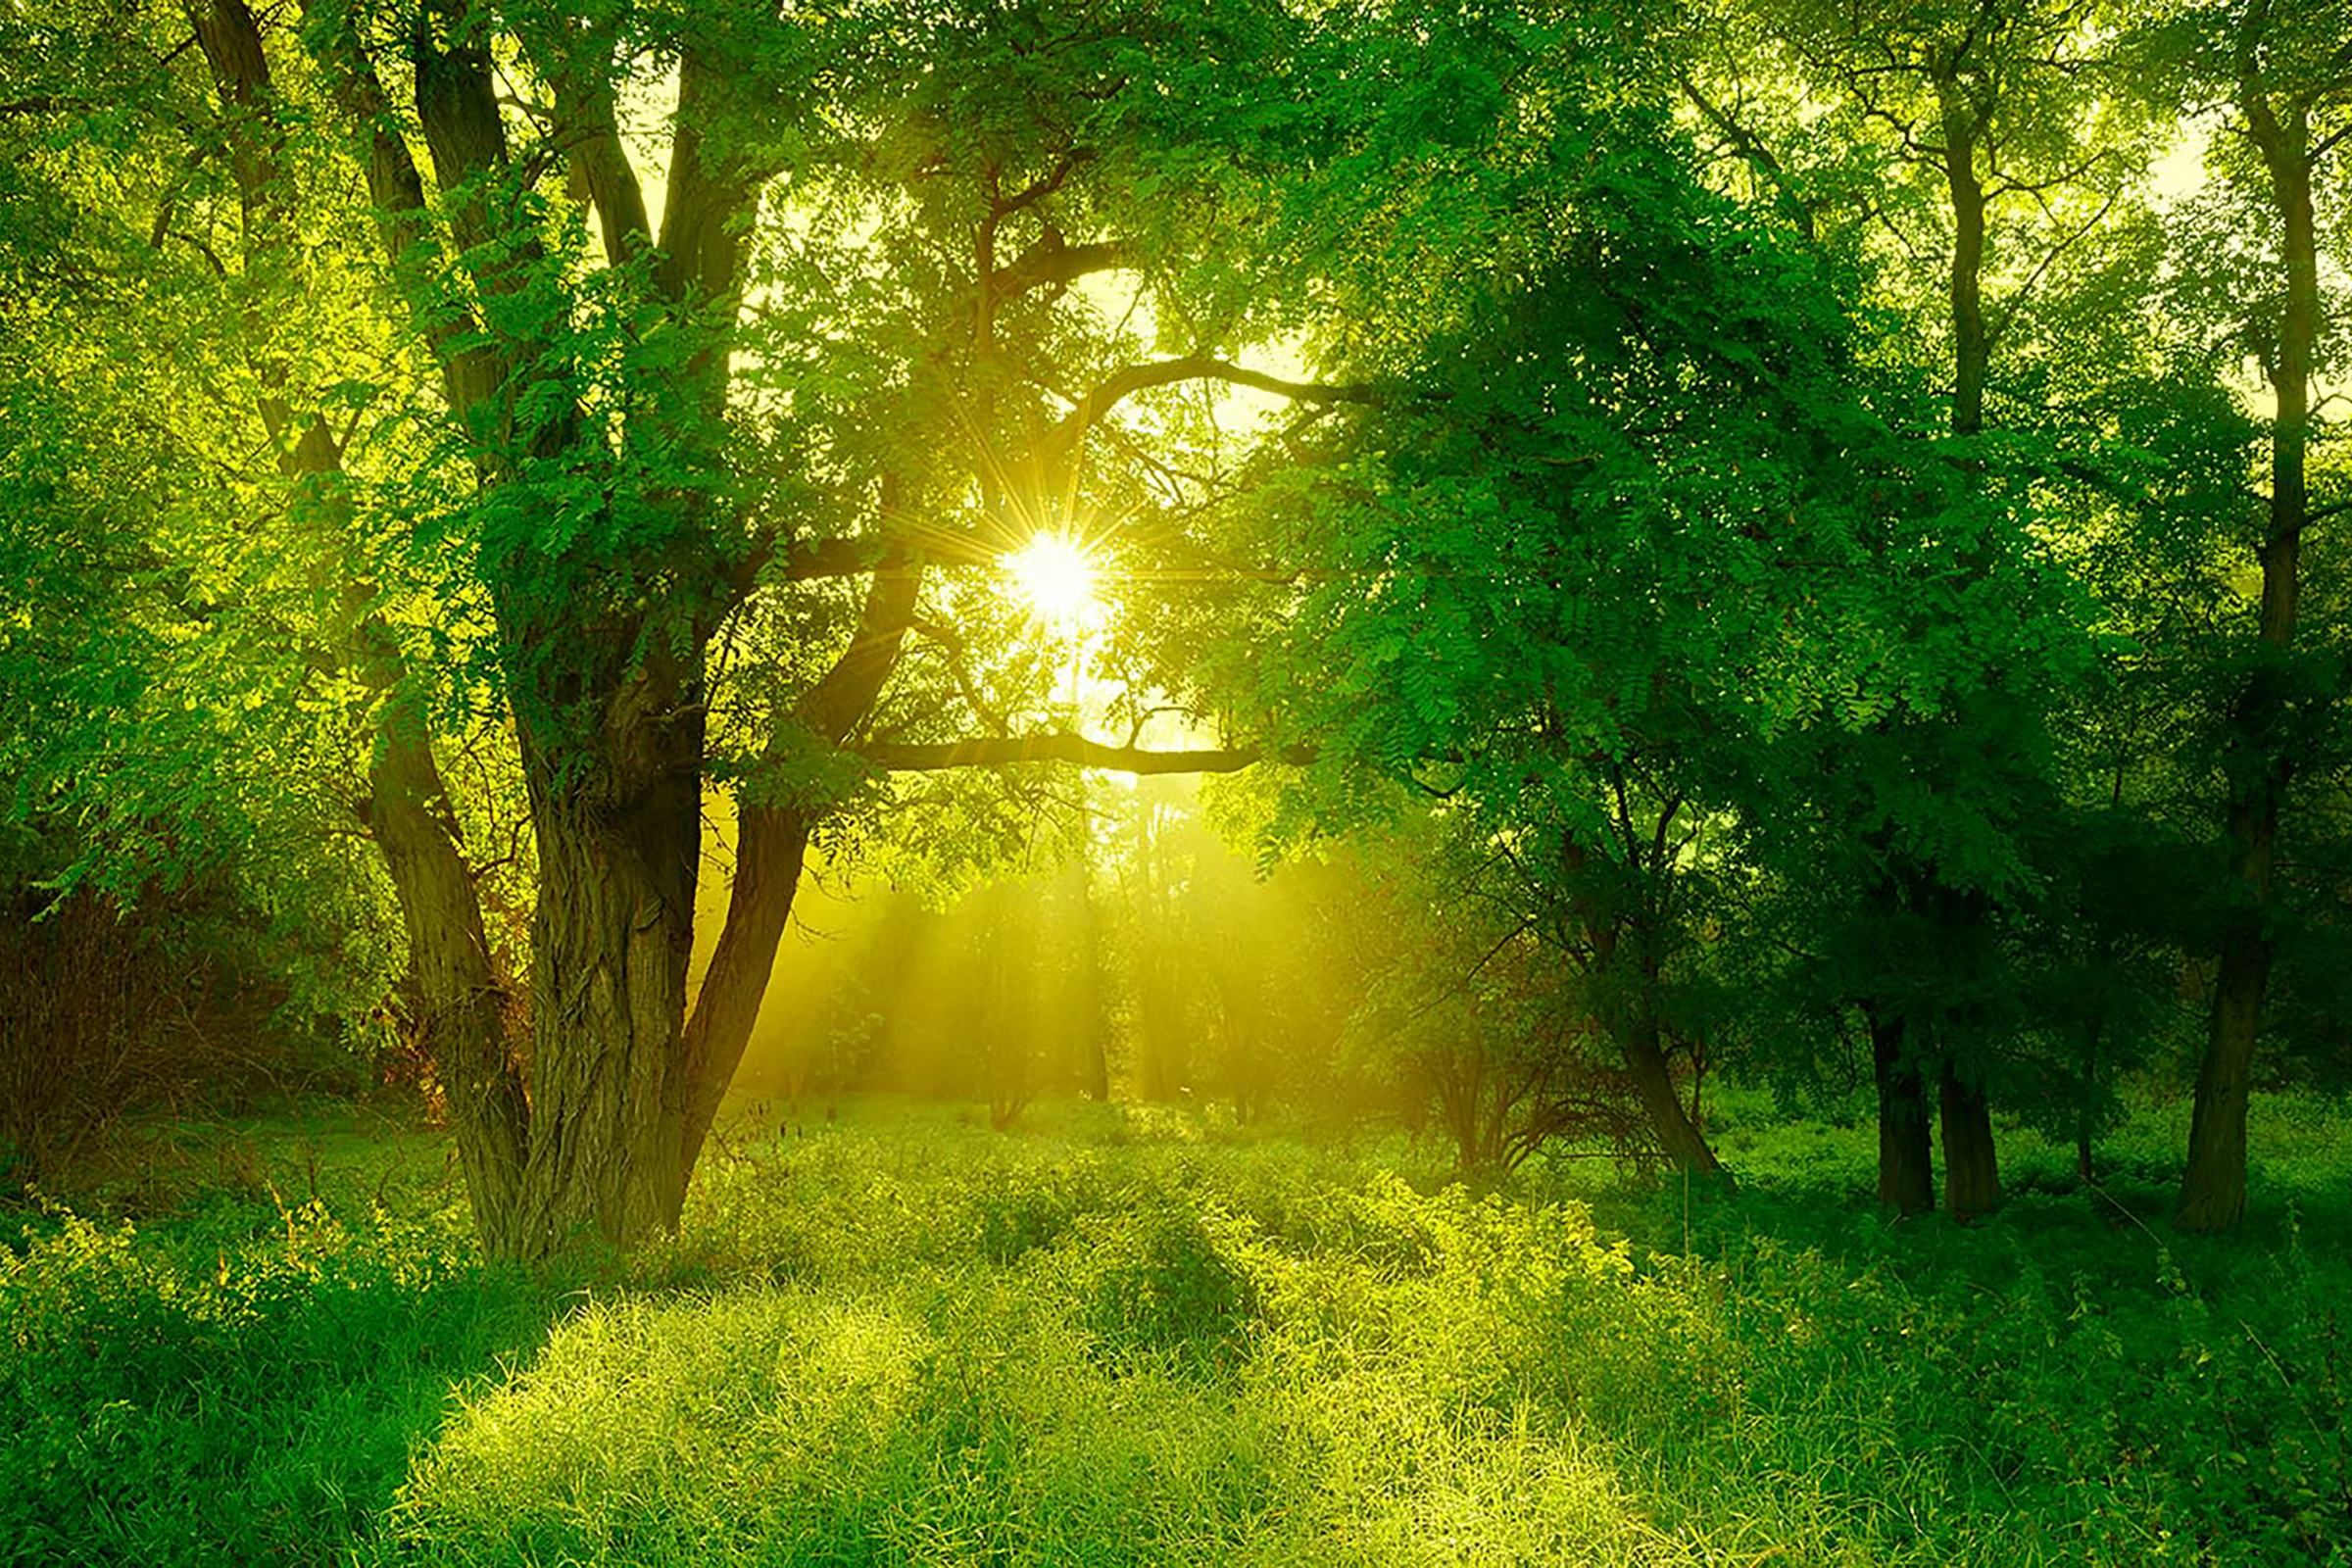 Sunlight peeks through the trees